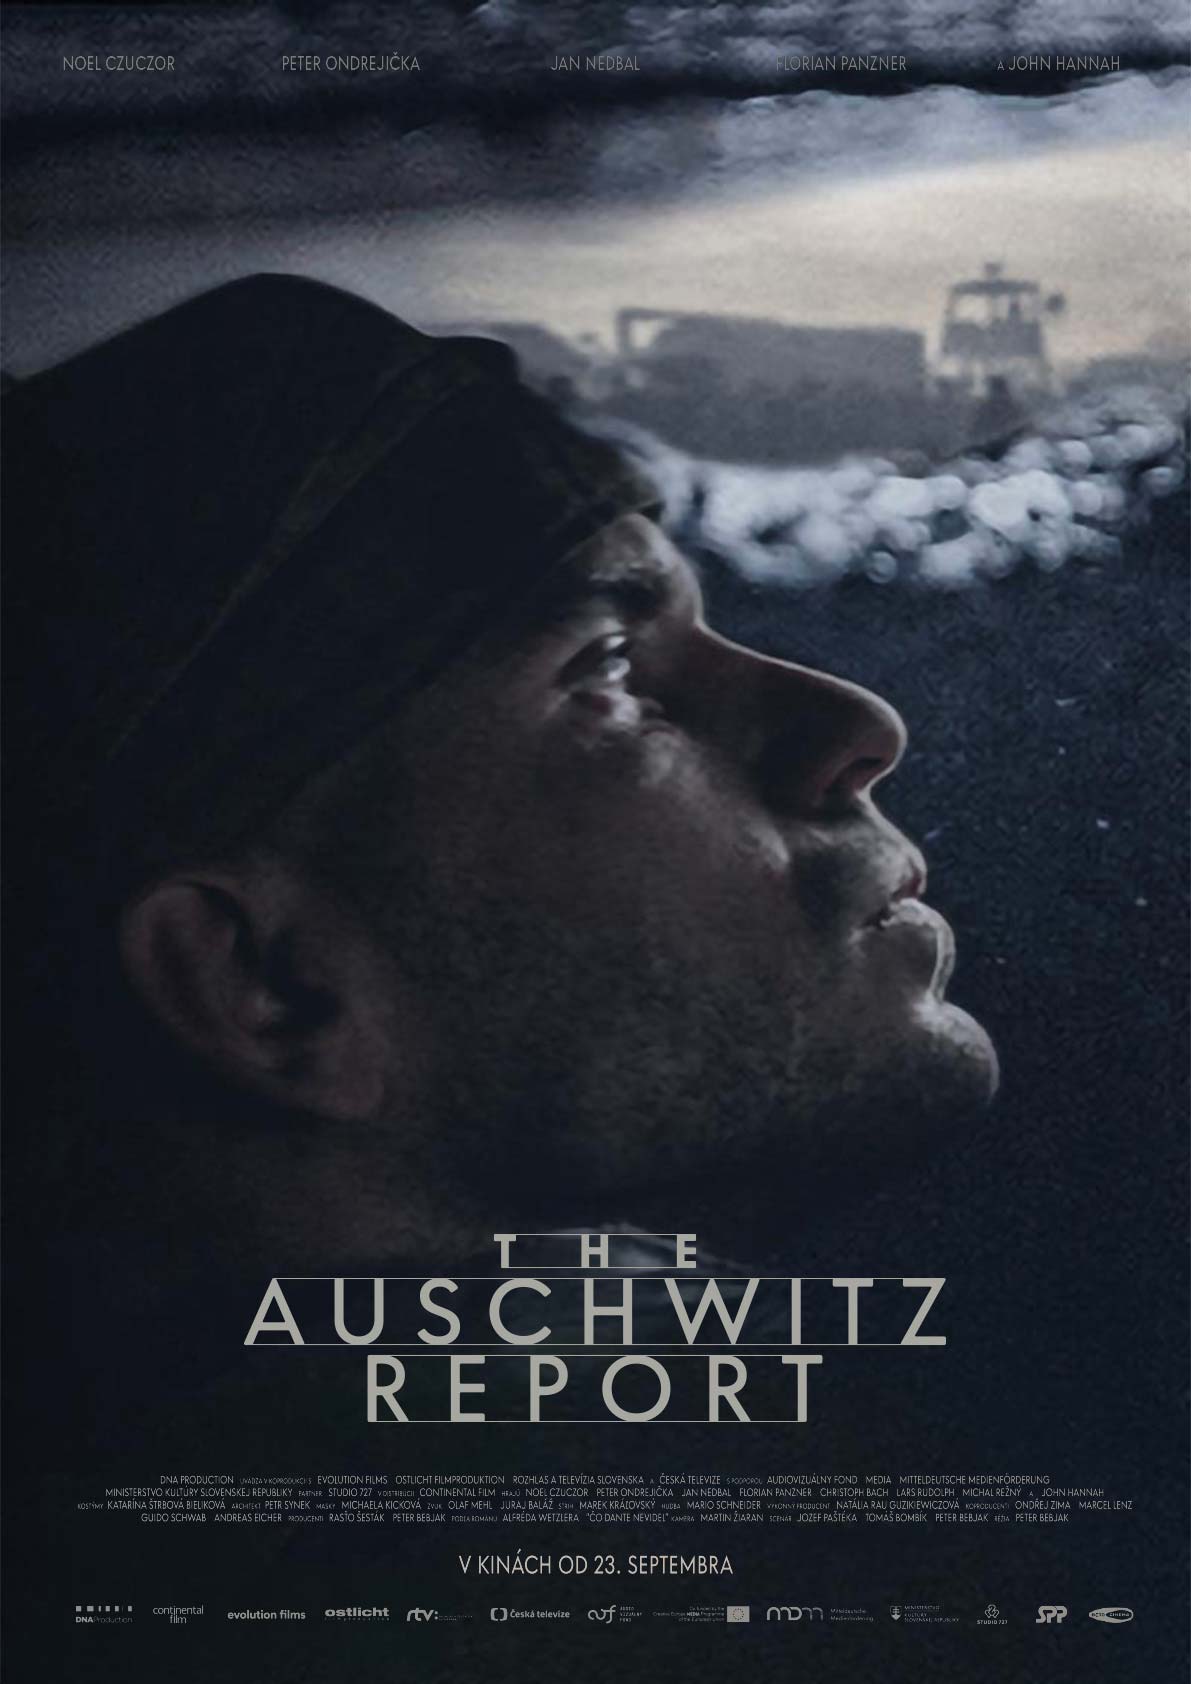 Branding: The Auschwitz Report